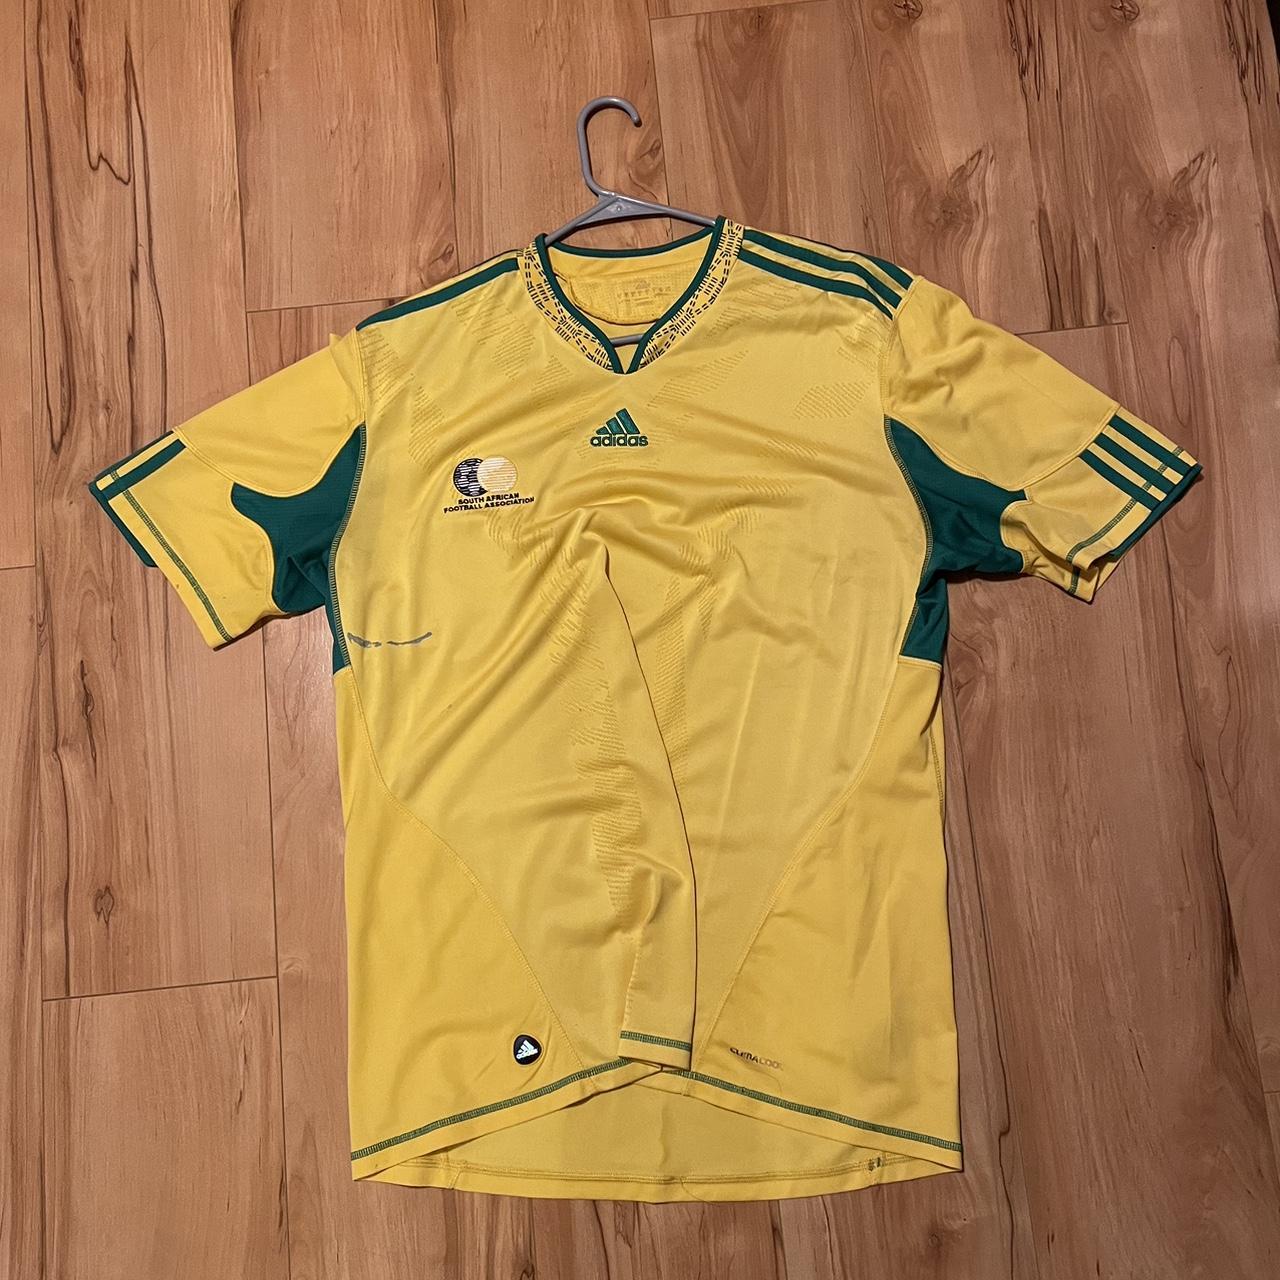 Vintage South Africa soccer jersey size xl. Stain on - Depop